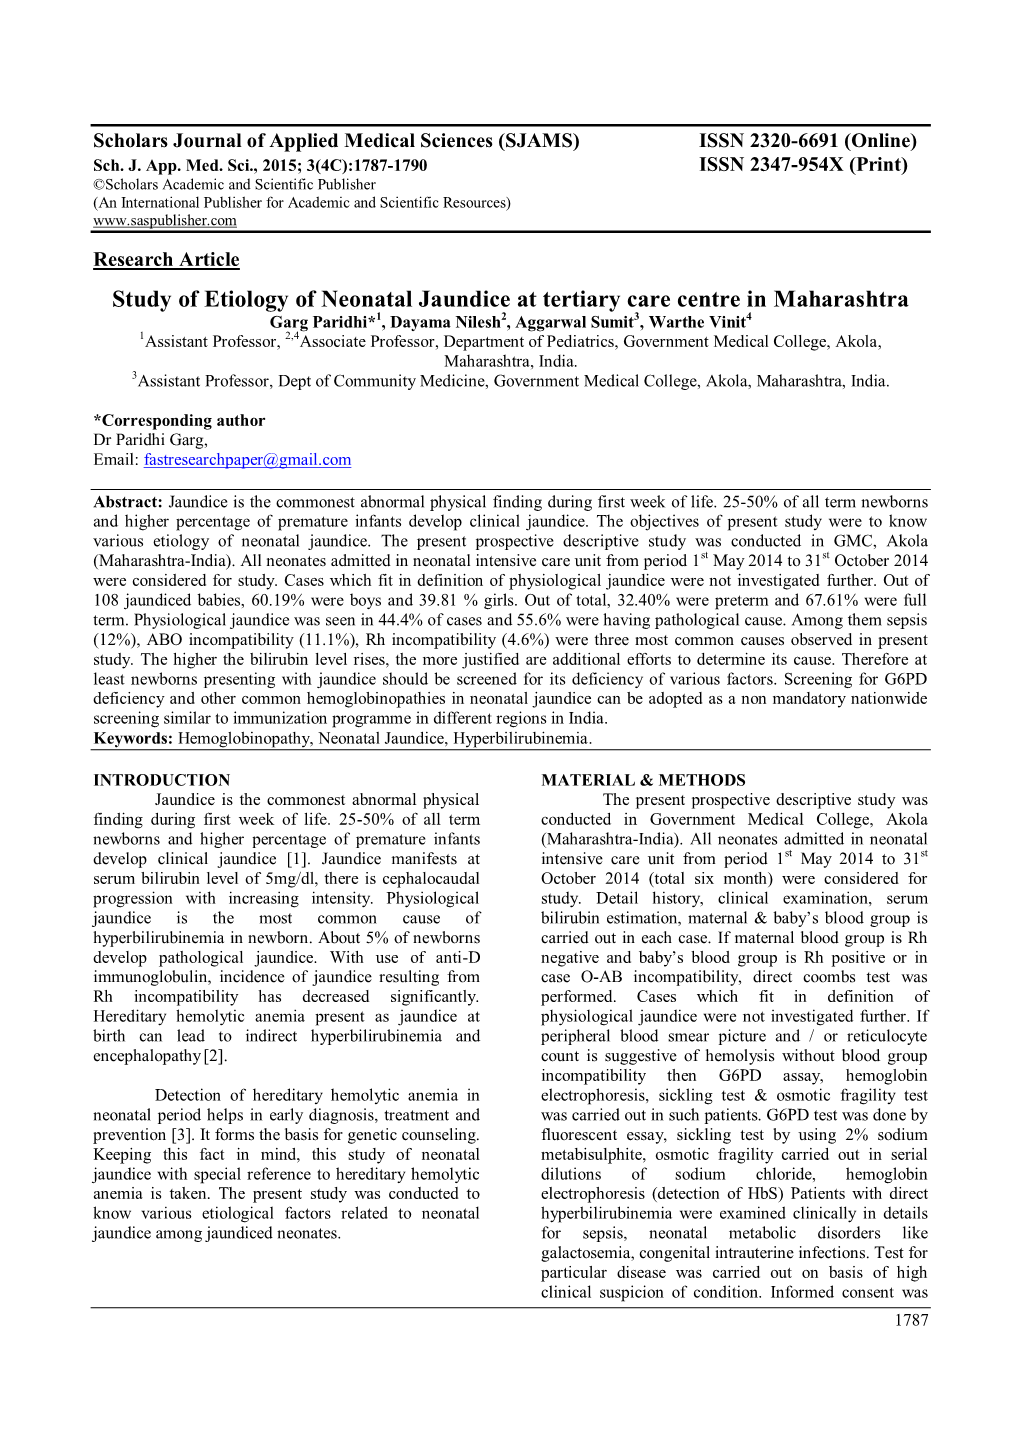 Study of Etiology of Neonatal Jaundice